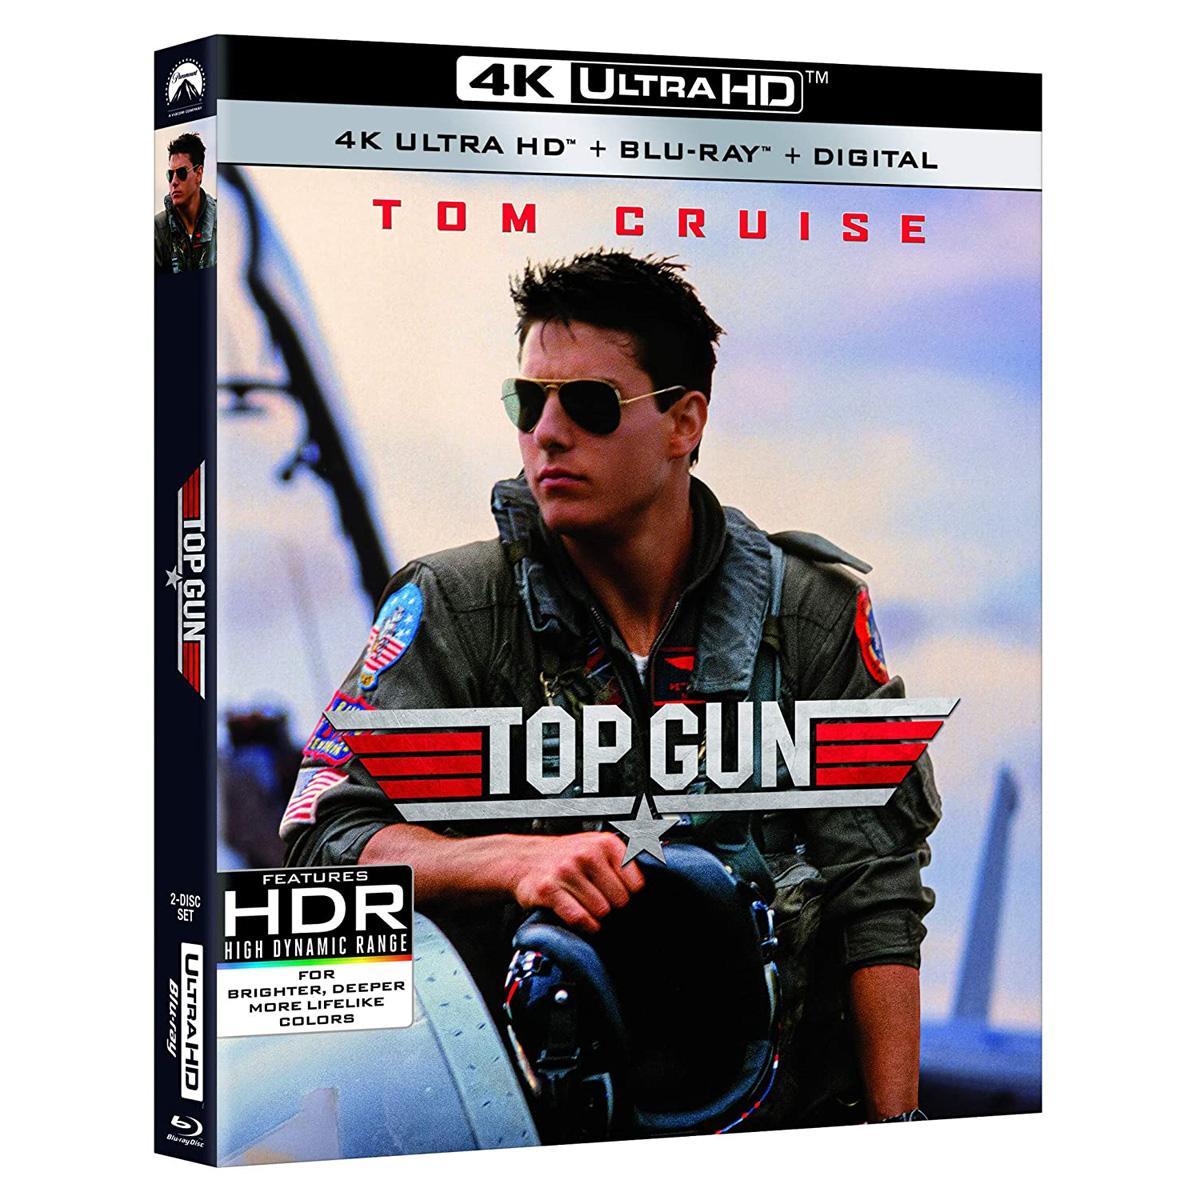 Top Gun 4K Blu-ray for $7.99